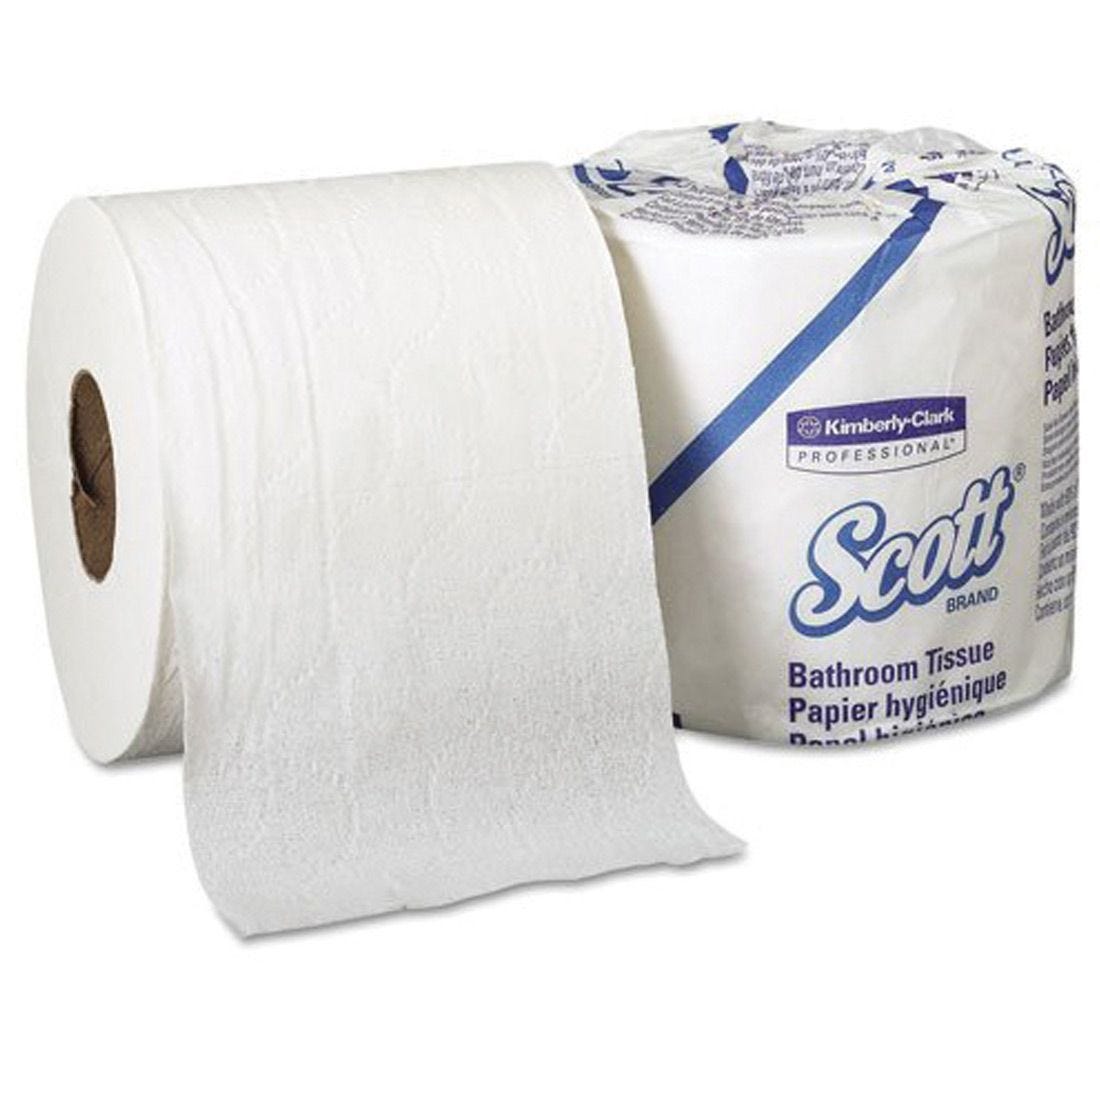 Scott 2-ply Standard Bathroom Tissue